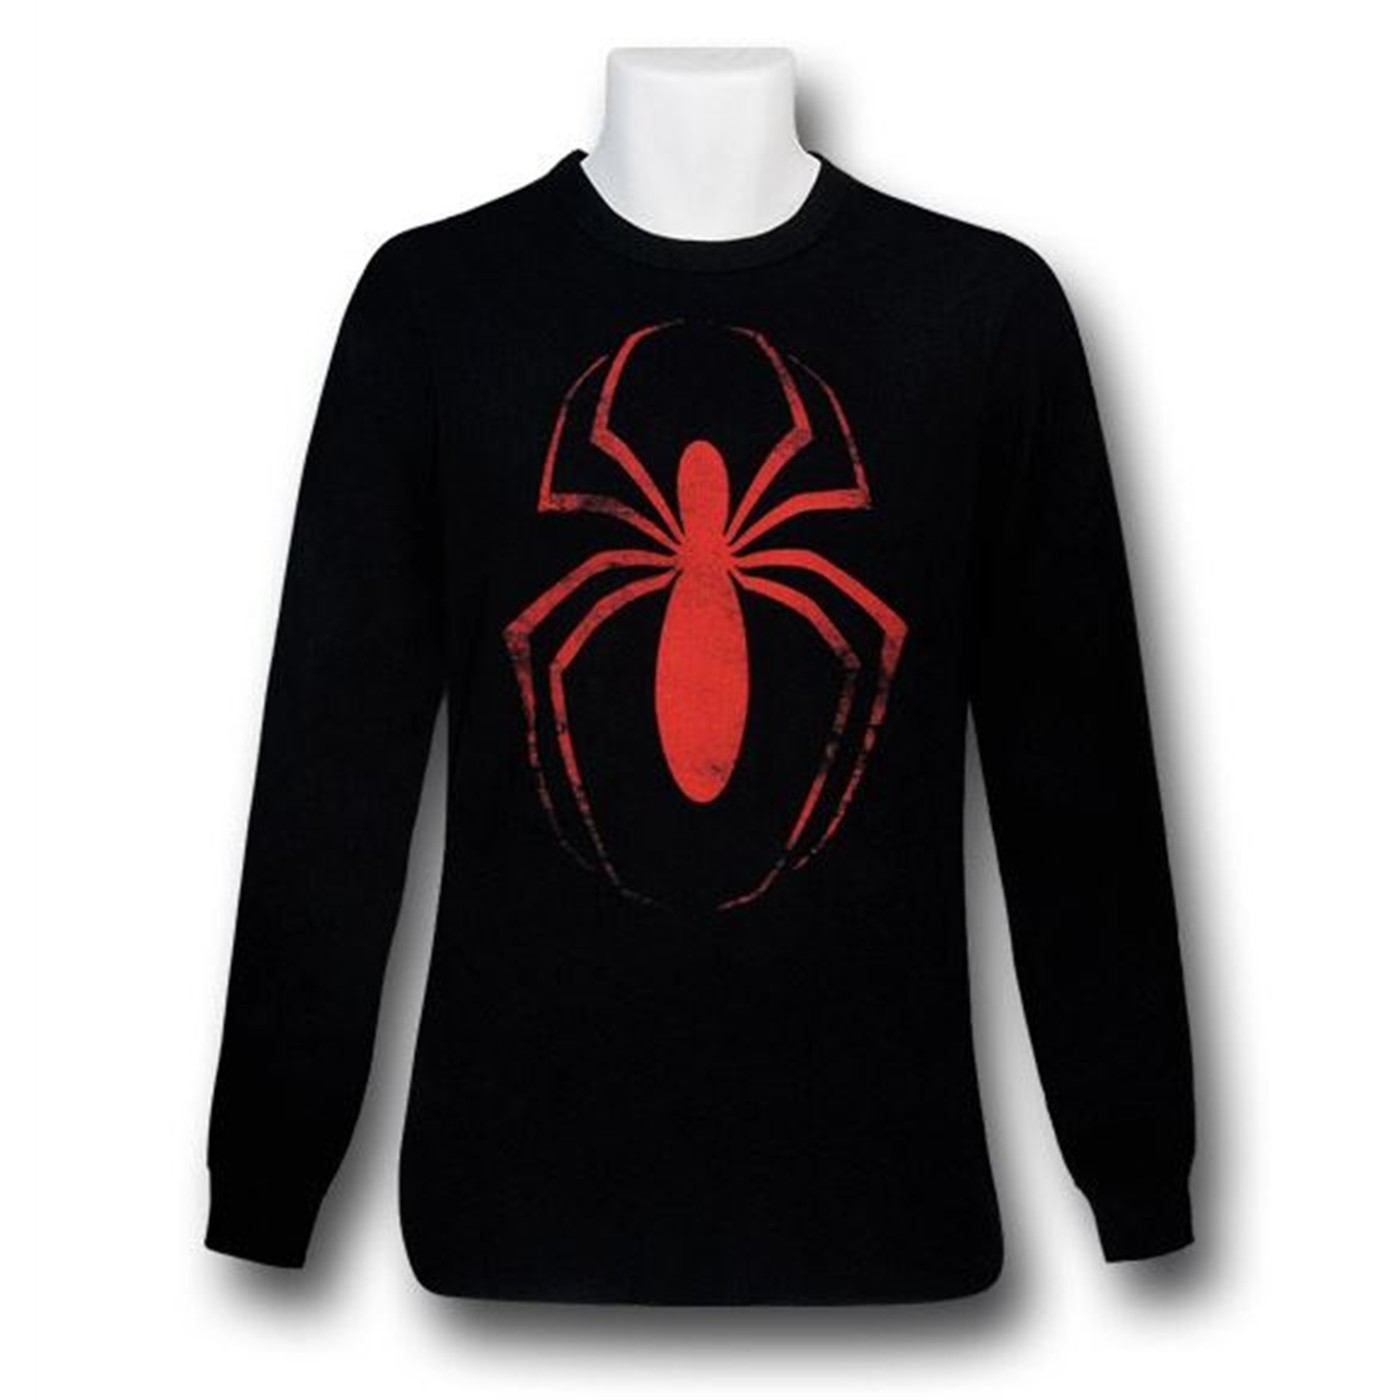 Spiderman Black Thermal Long Sleeve T-Shirt